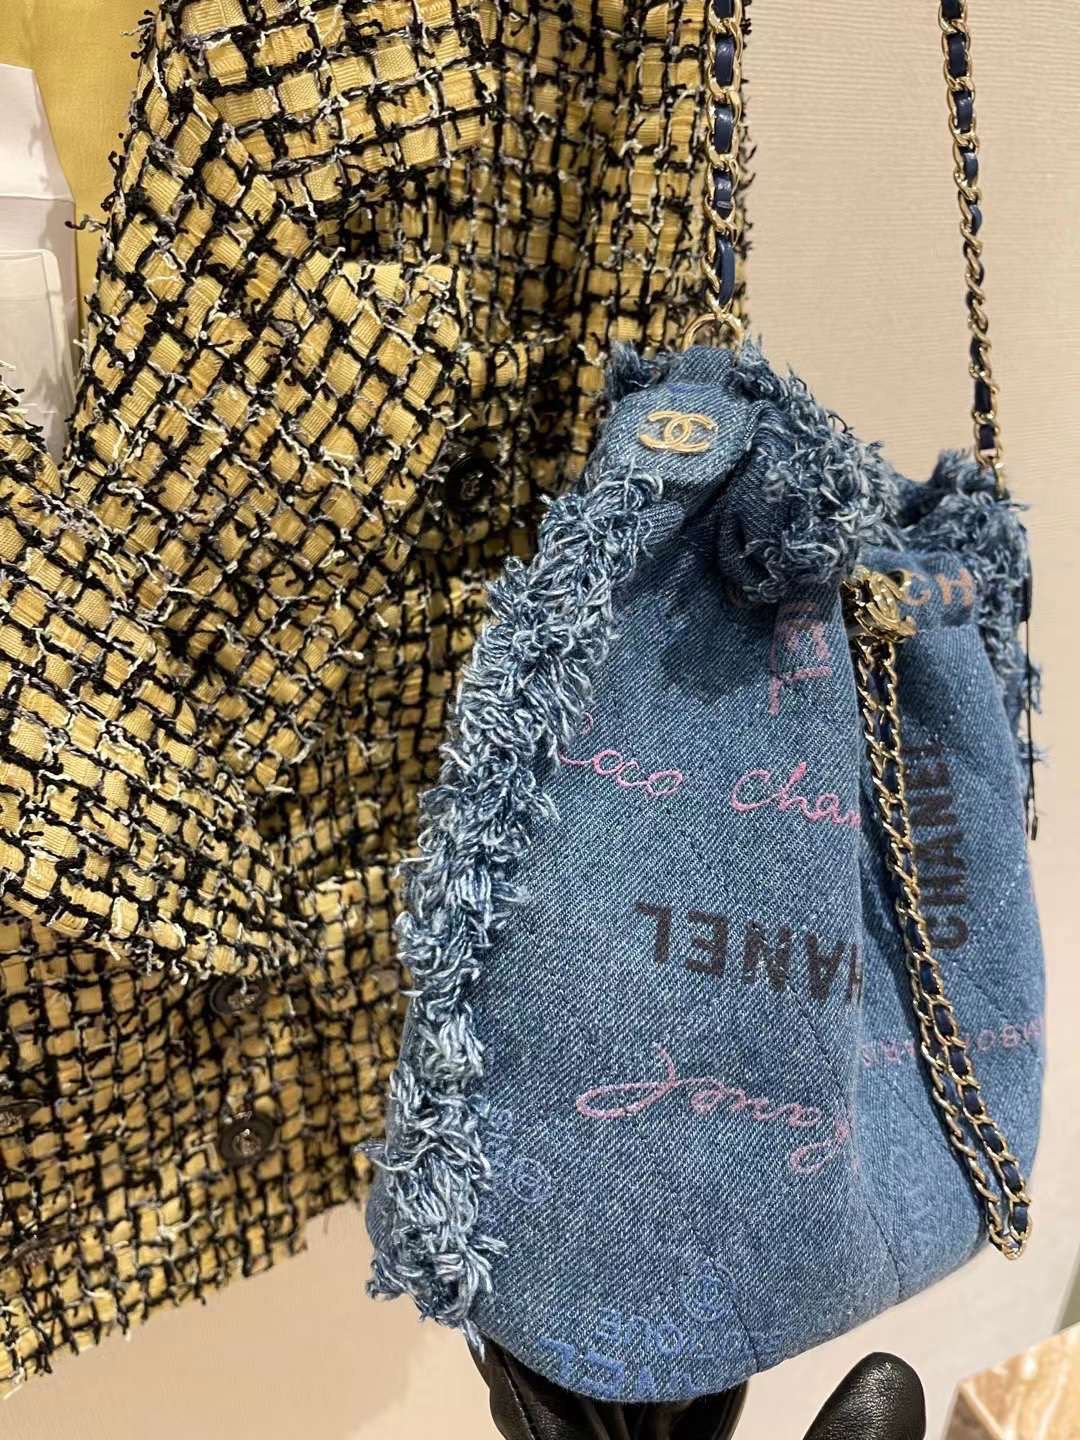 【P1170】Chanel香奈儿2022年新款字母涂鸦牛仔水桶包大号 蓝色